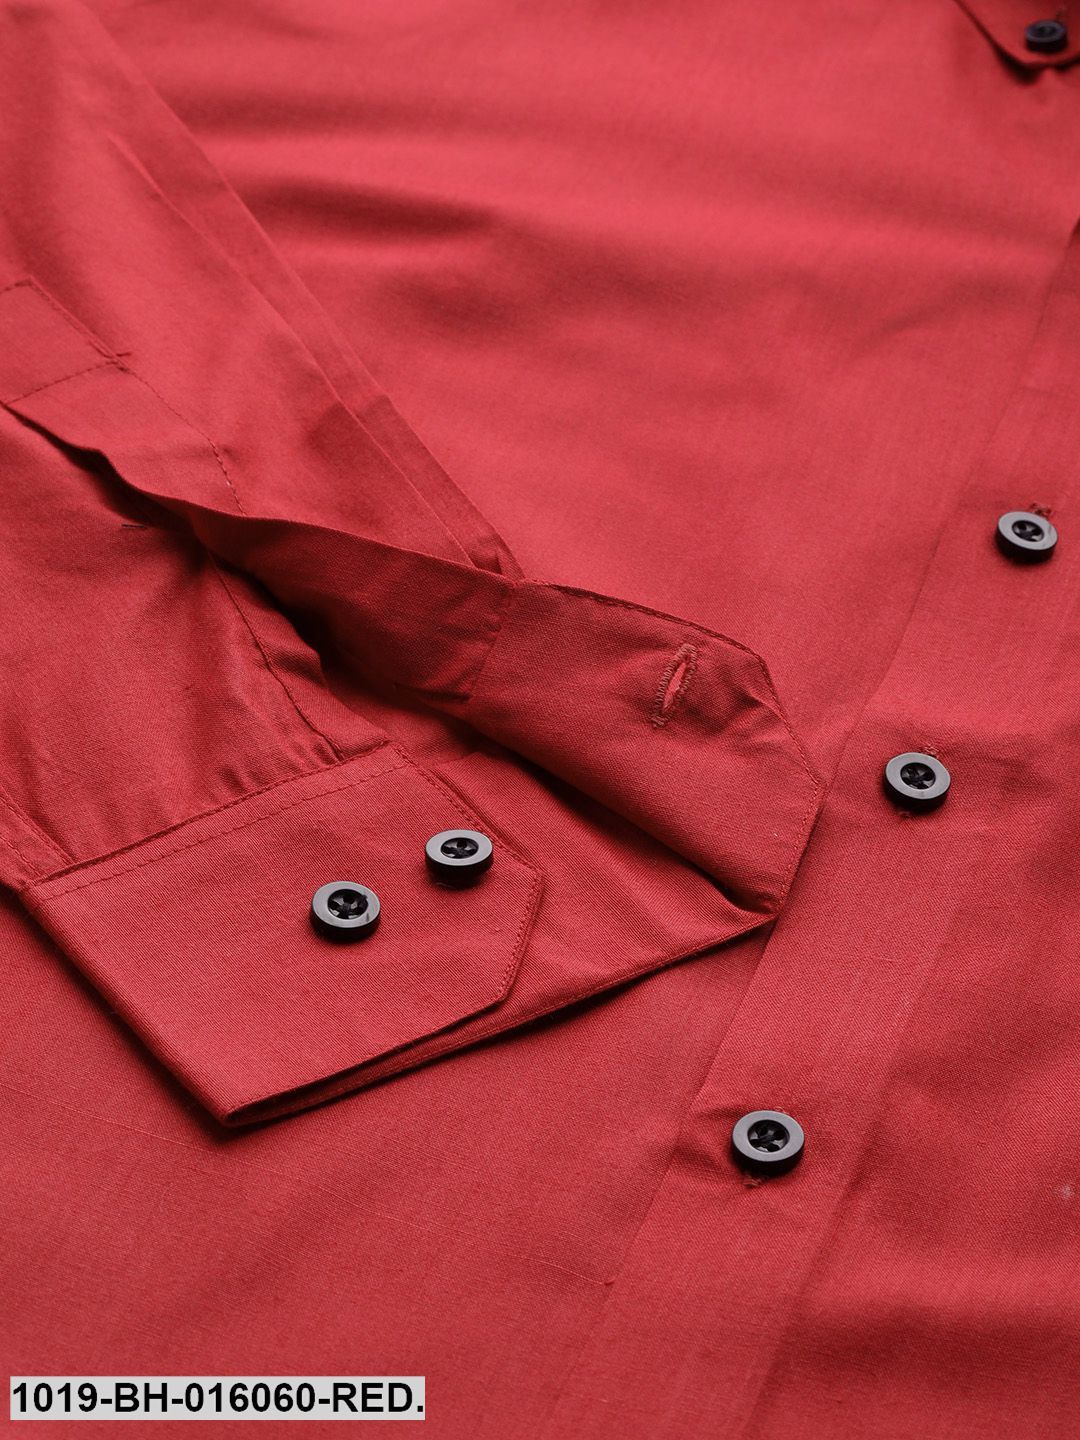 Men's Cotton Red Casual Shirt - Sojanya